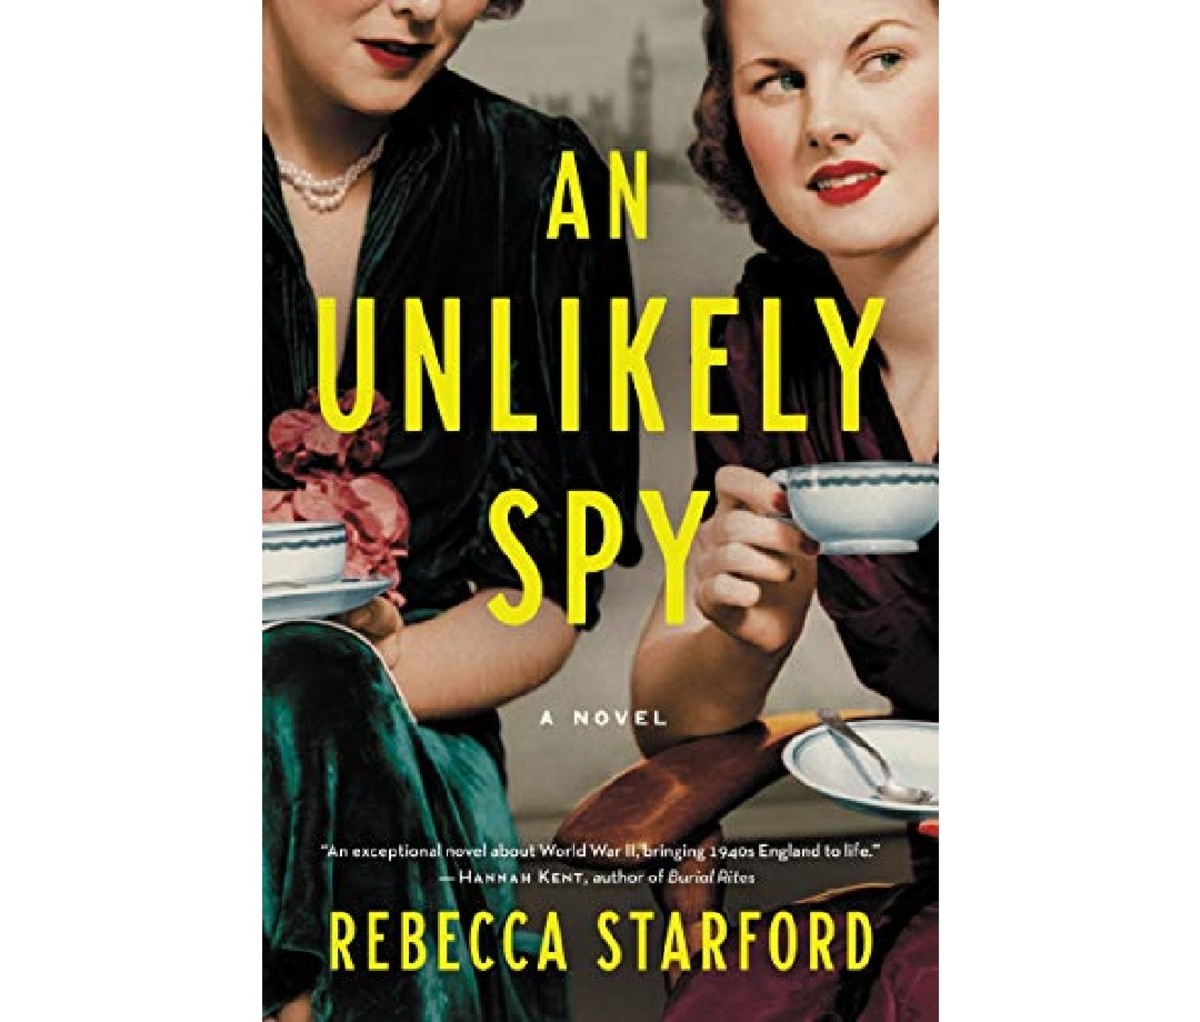 An Unlikely Spy: A Novel by Rebecca Starford